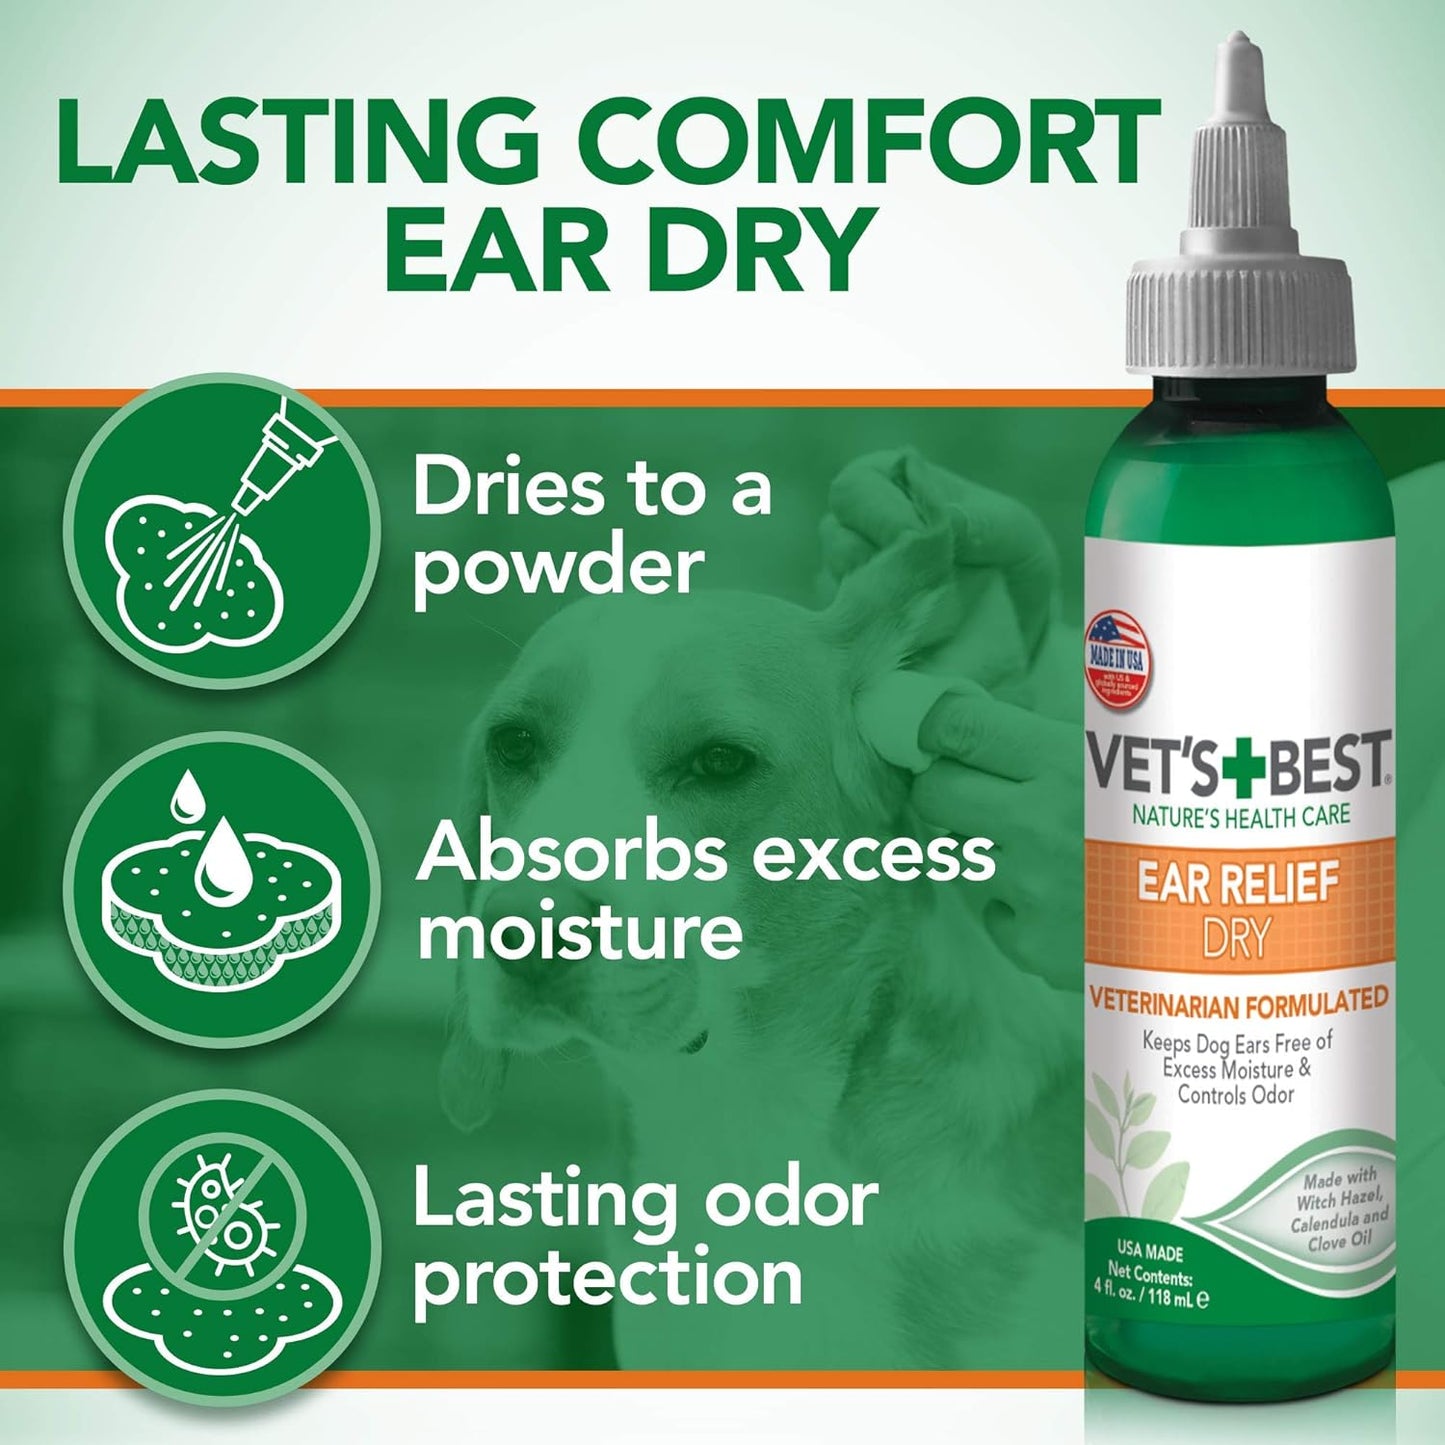 Vet's Best Ear Relief Dry For Dogs, 4-oz